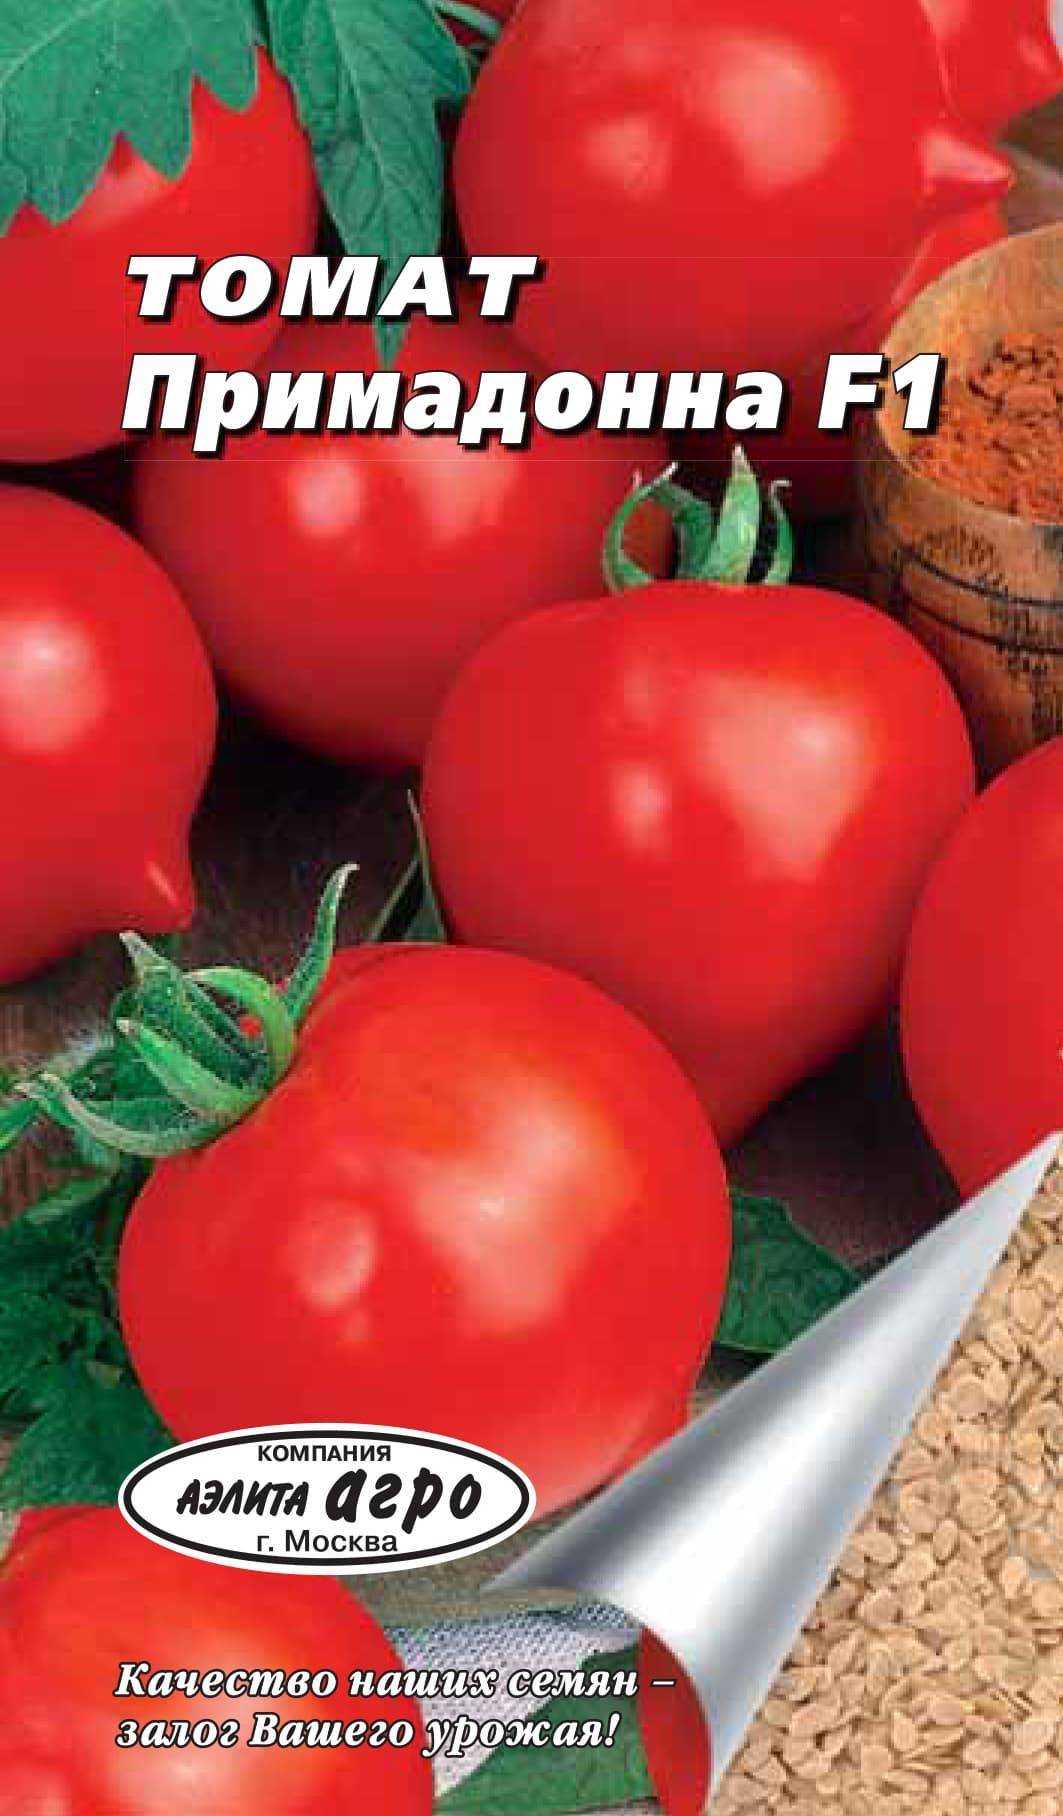 Помидоры примадонна описание. Помидоры Примадонна f1. Семена томат Примадонна f1. Примадонна ф1 томат описание.